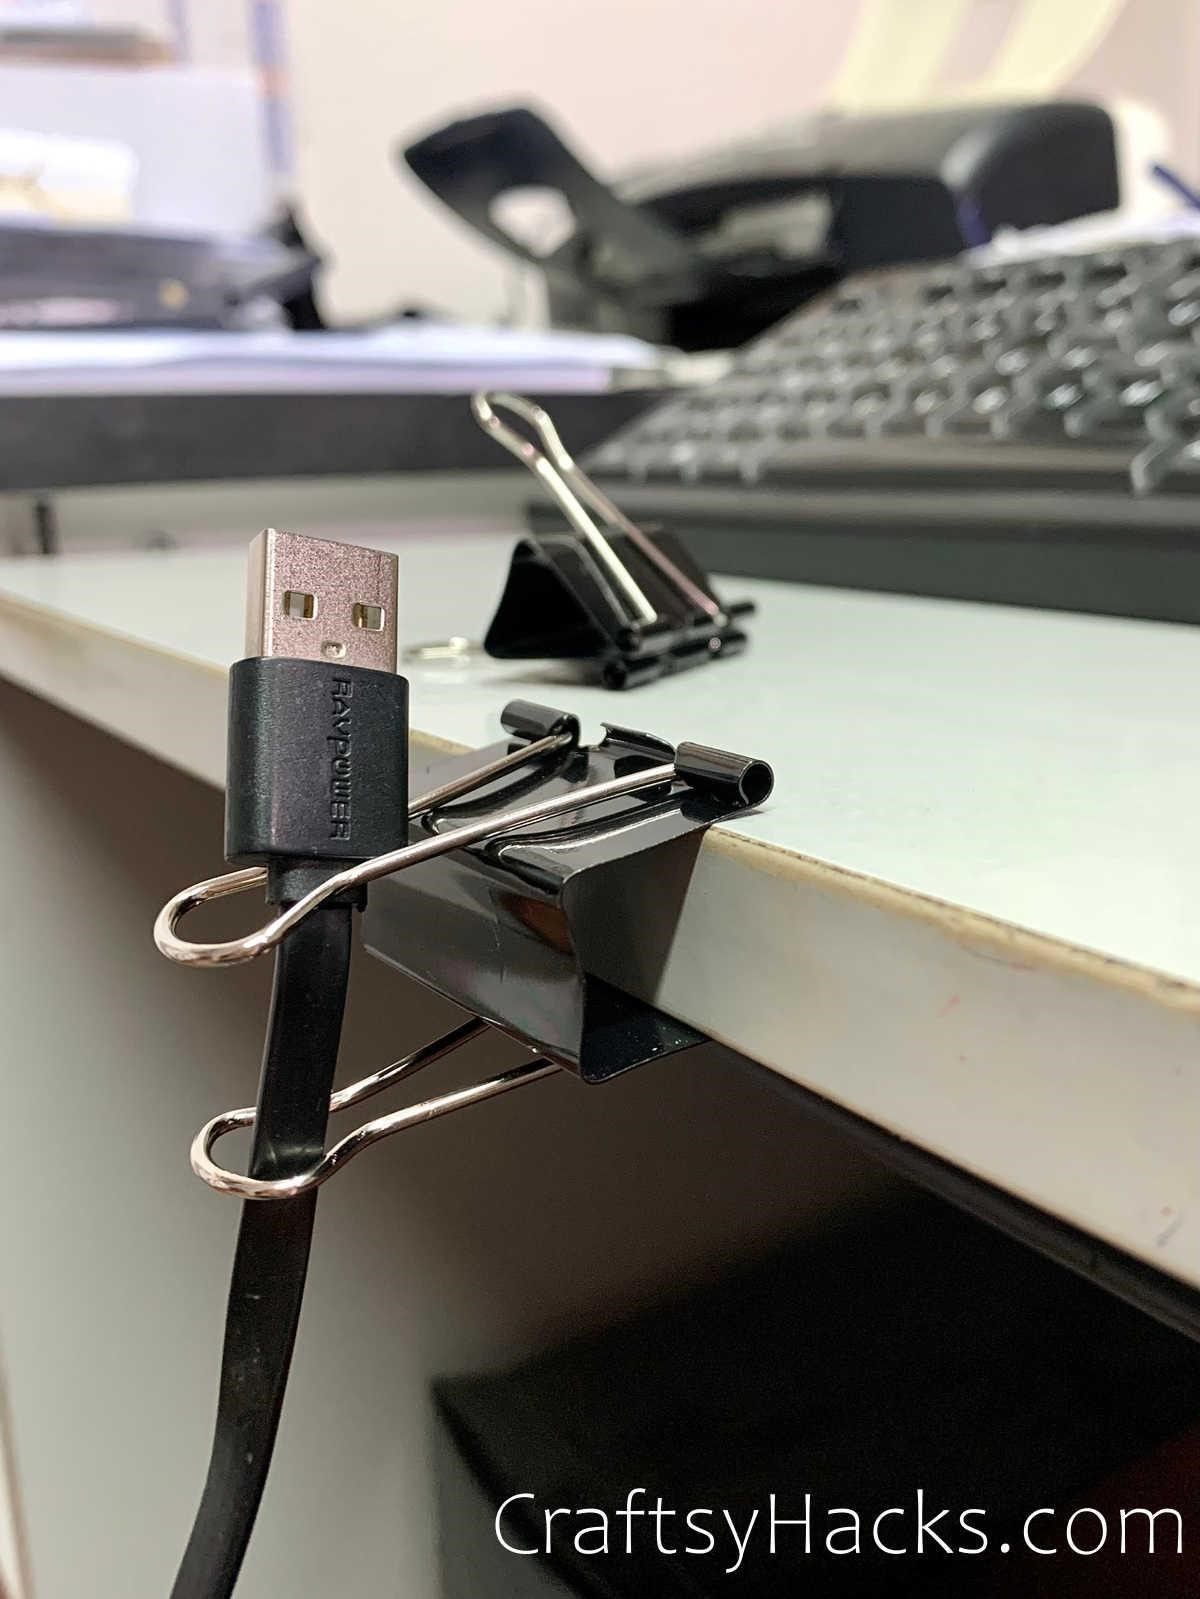 binder clips to organize wires